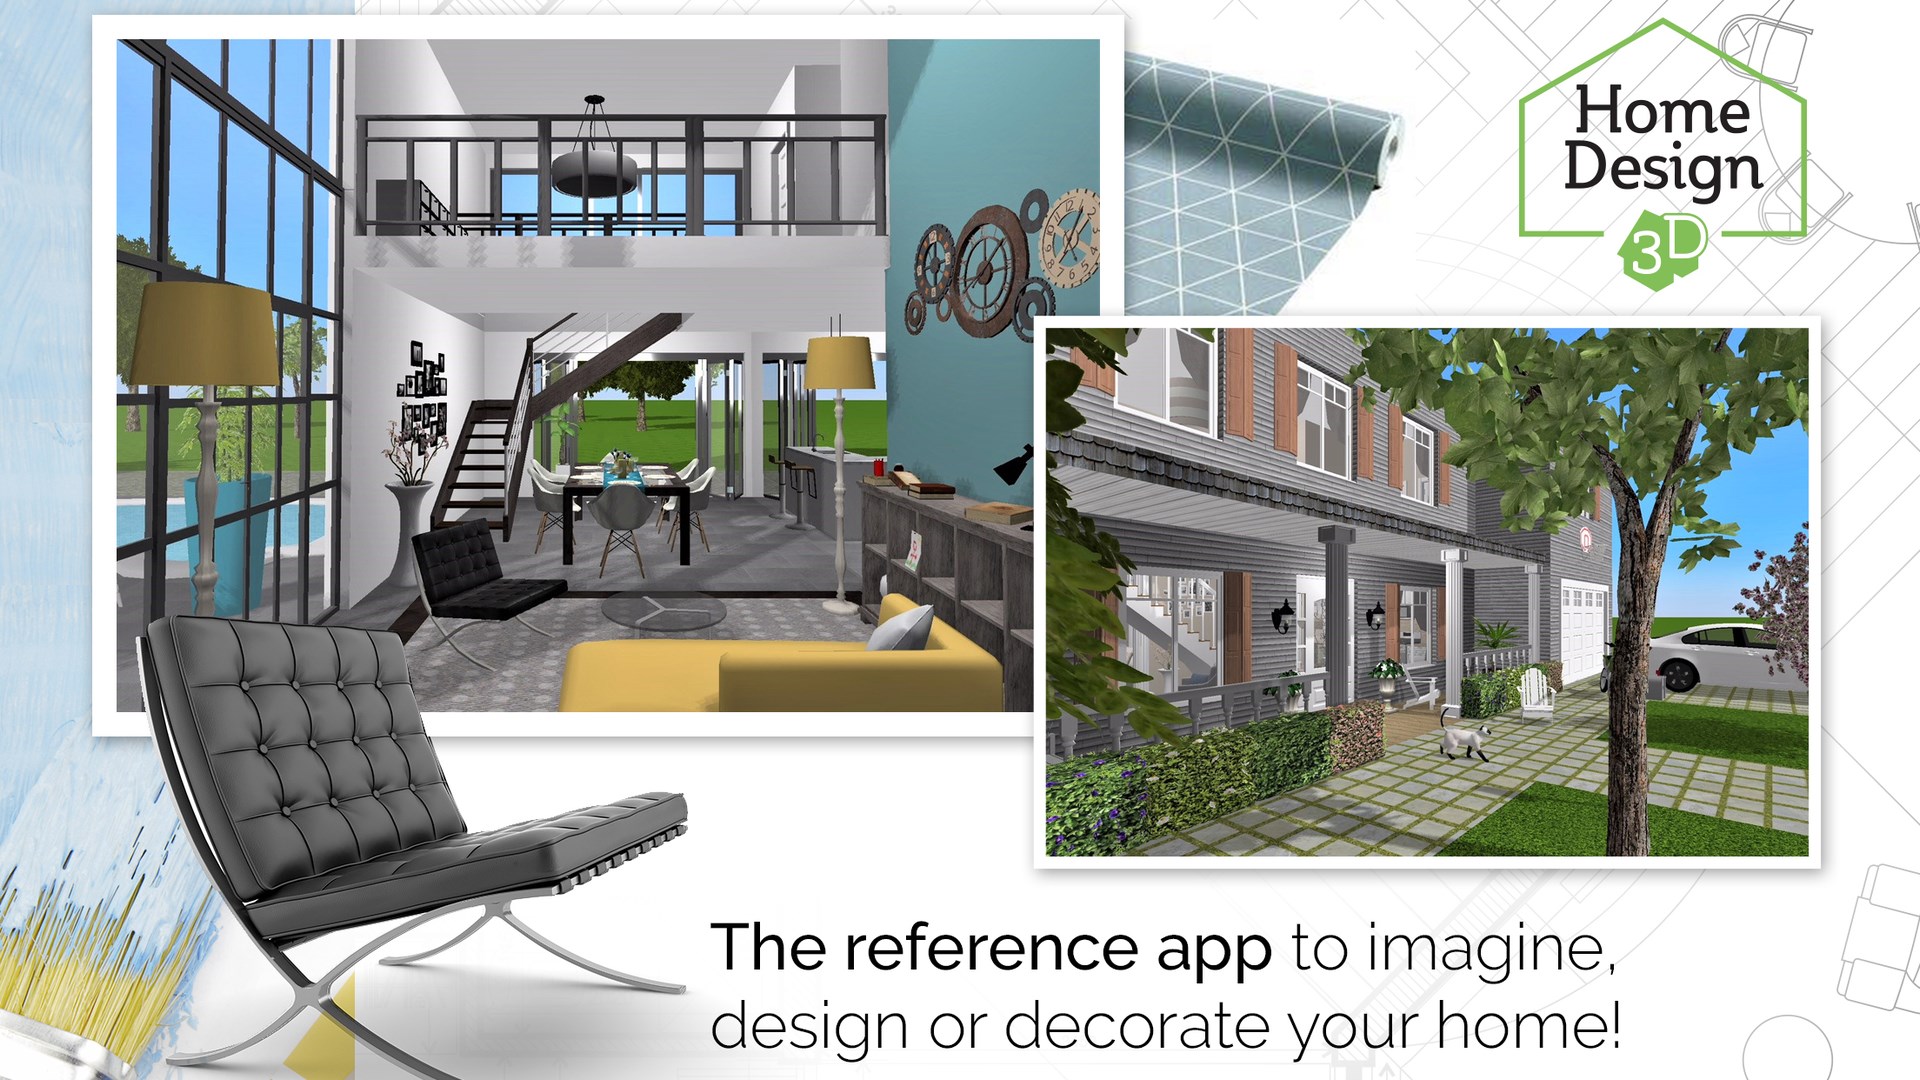 Home Design 3D - Microsoft Apps